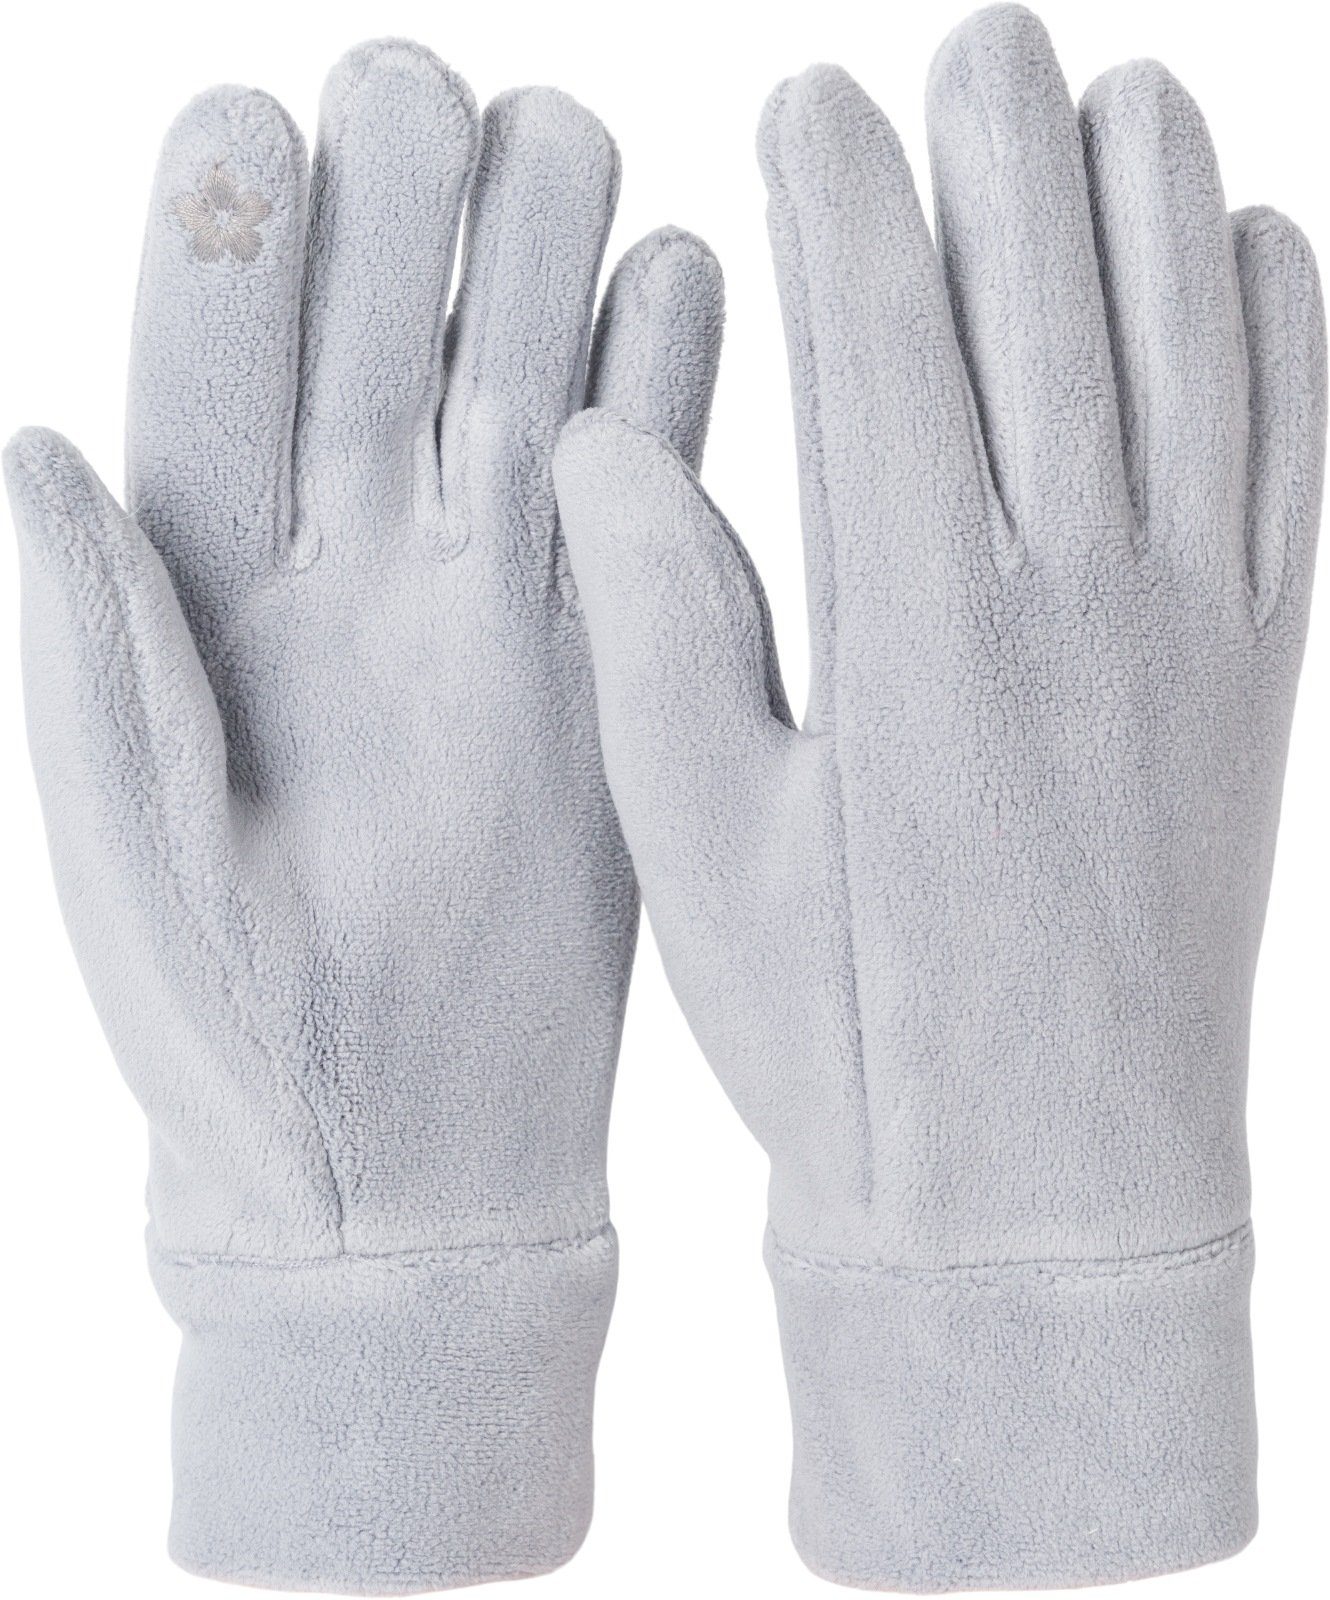 styleBREAKER Fleecehandschuhe Einfarbige Touchscreen Fleece Handschuhe Hellgrau